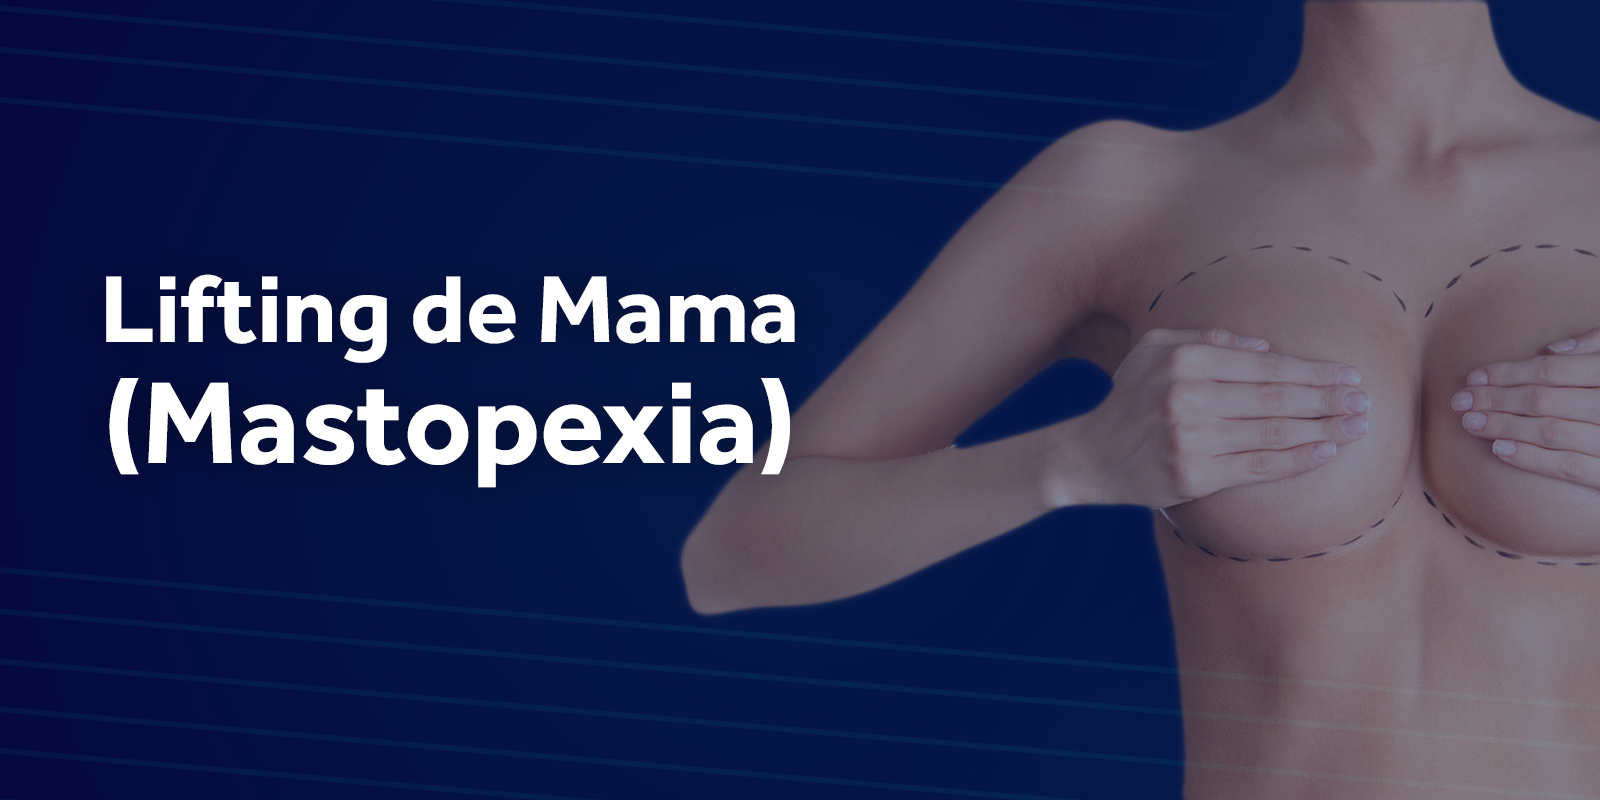 Lifting de Mama (Mastopexia)